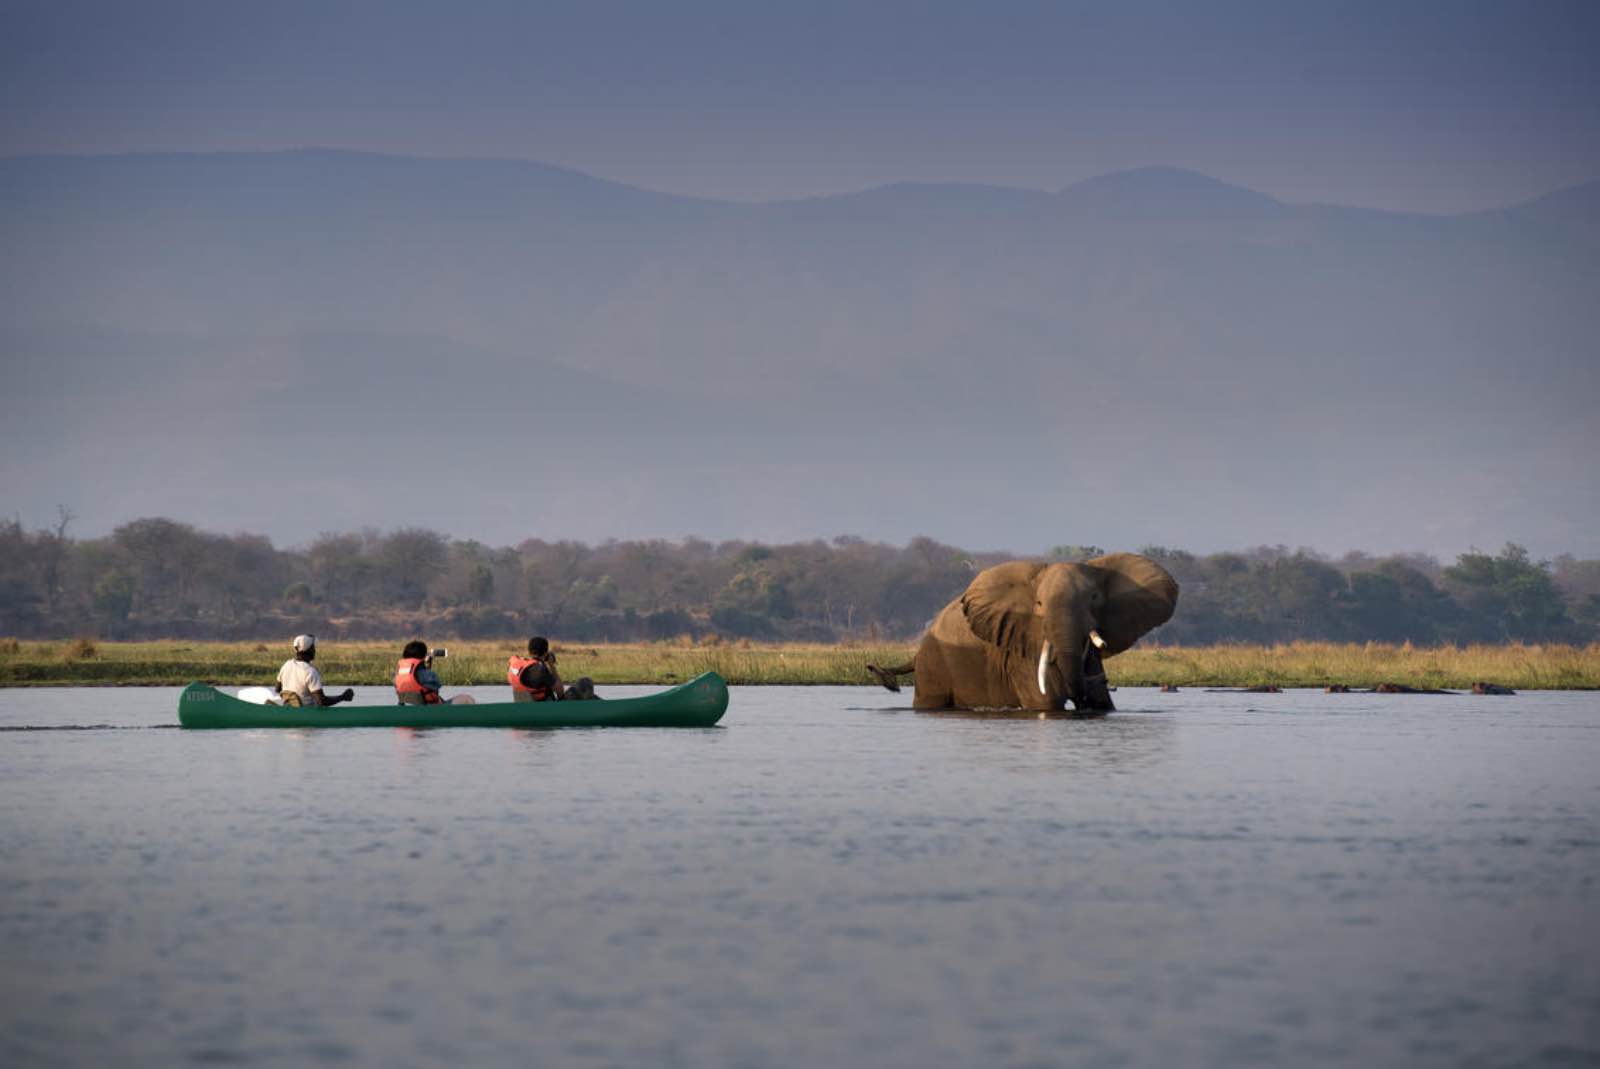 Nyamatusi elephants on a canoe